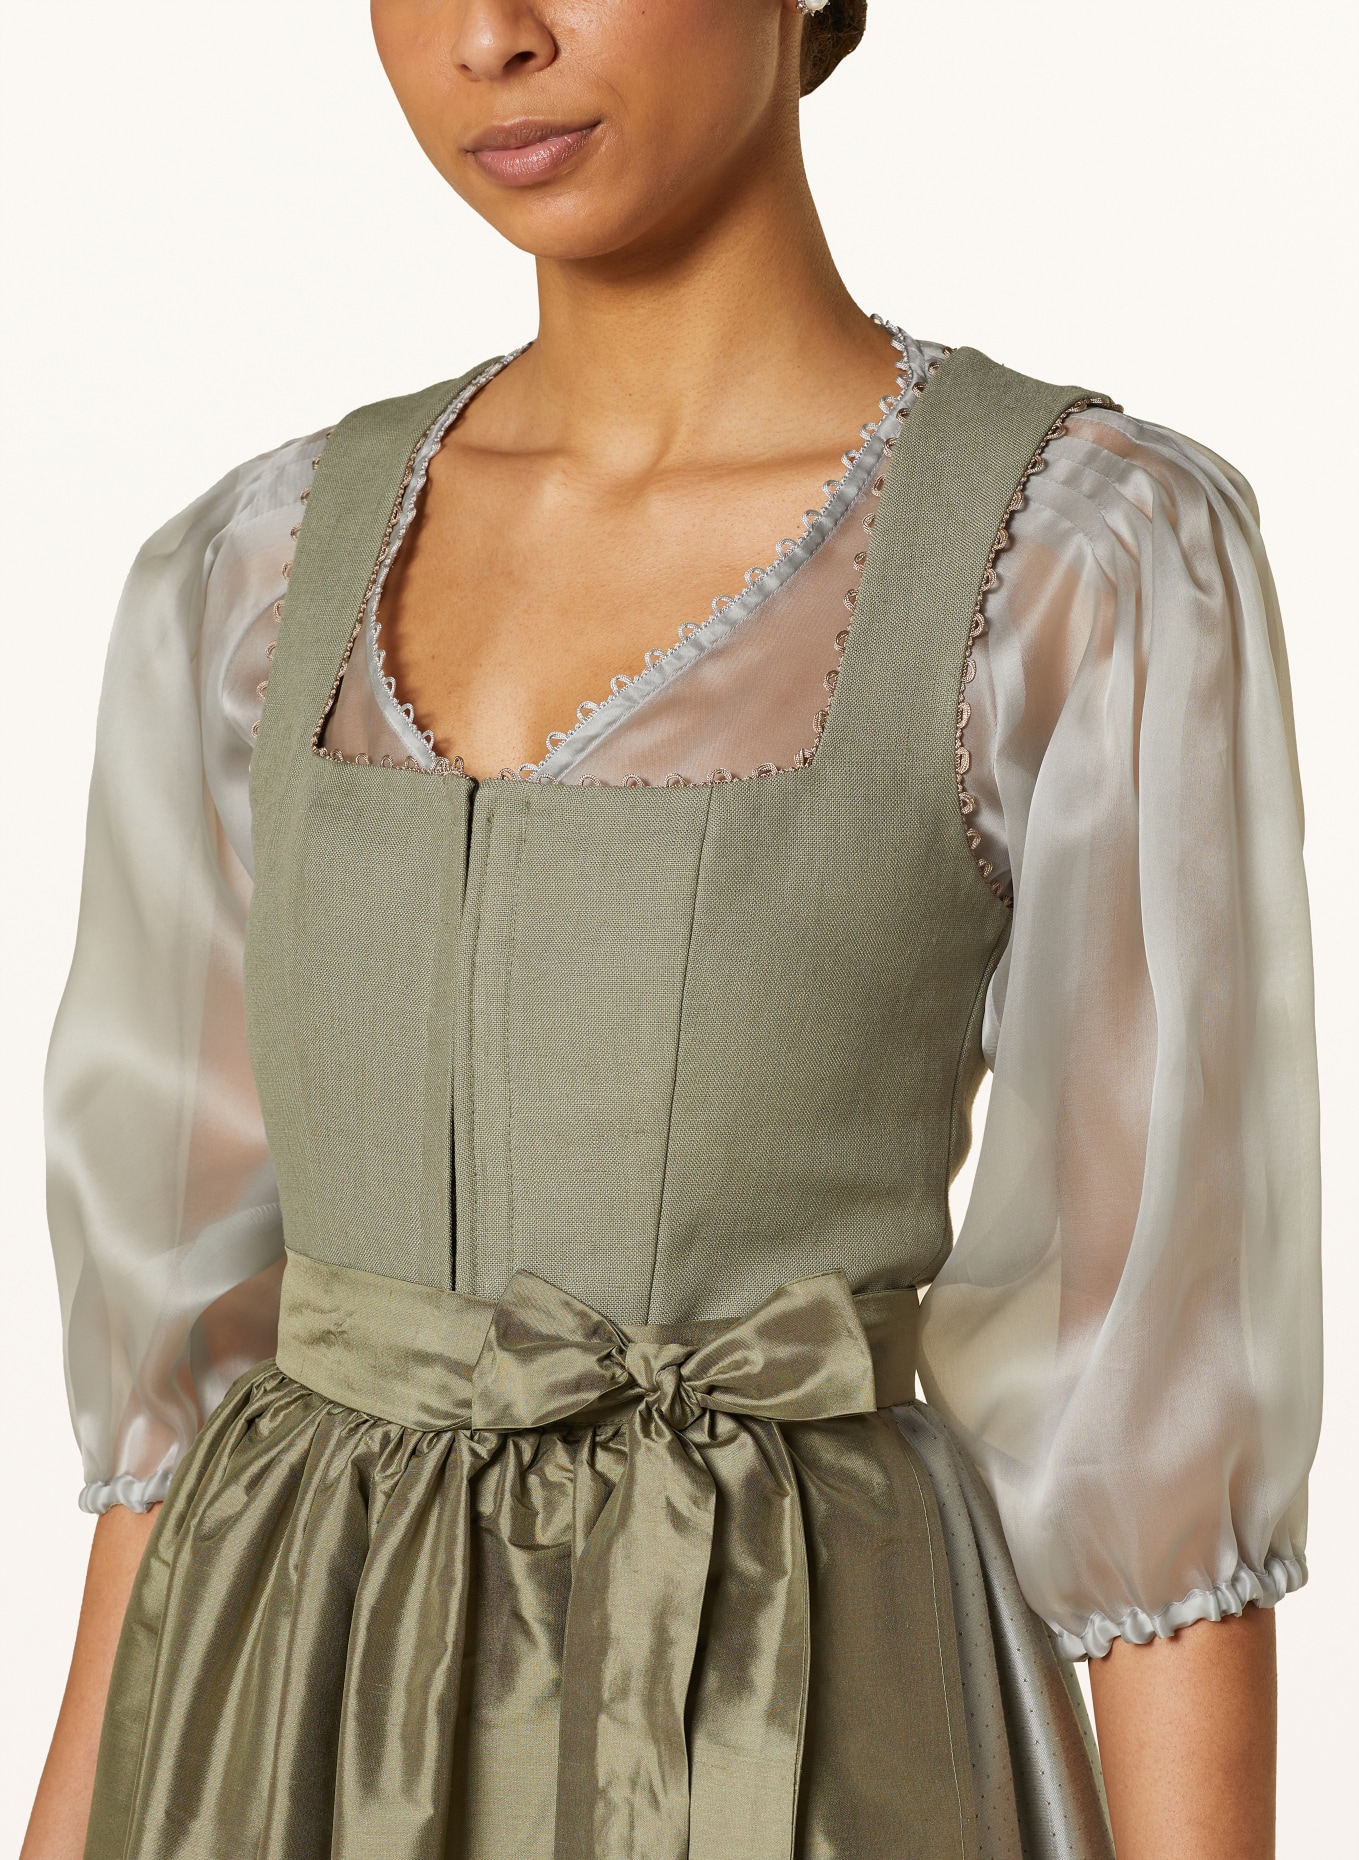 KINGA MATHE Dirndl blouse KAIRA made of silk, Color: LIGHT GRAY (Image 3)